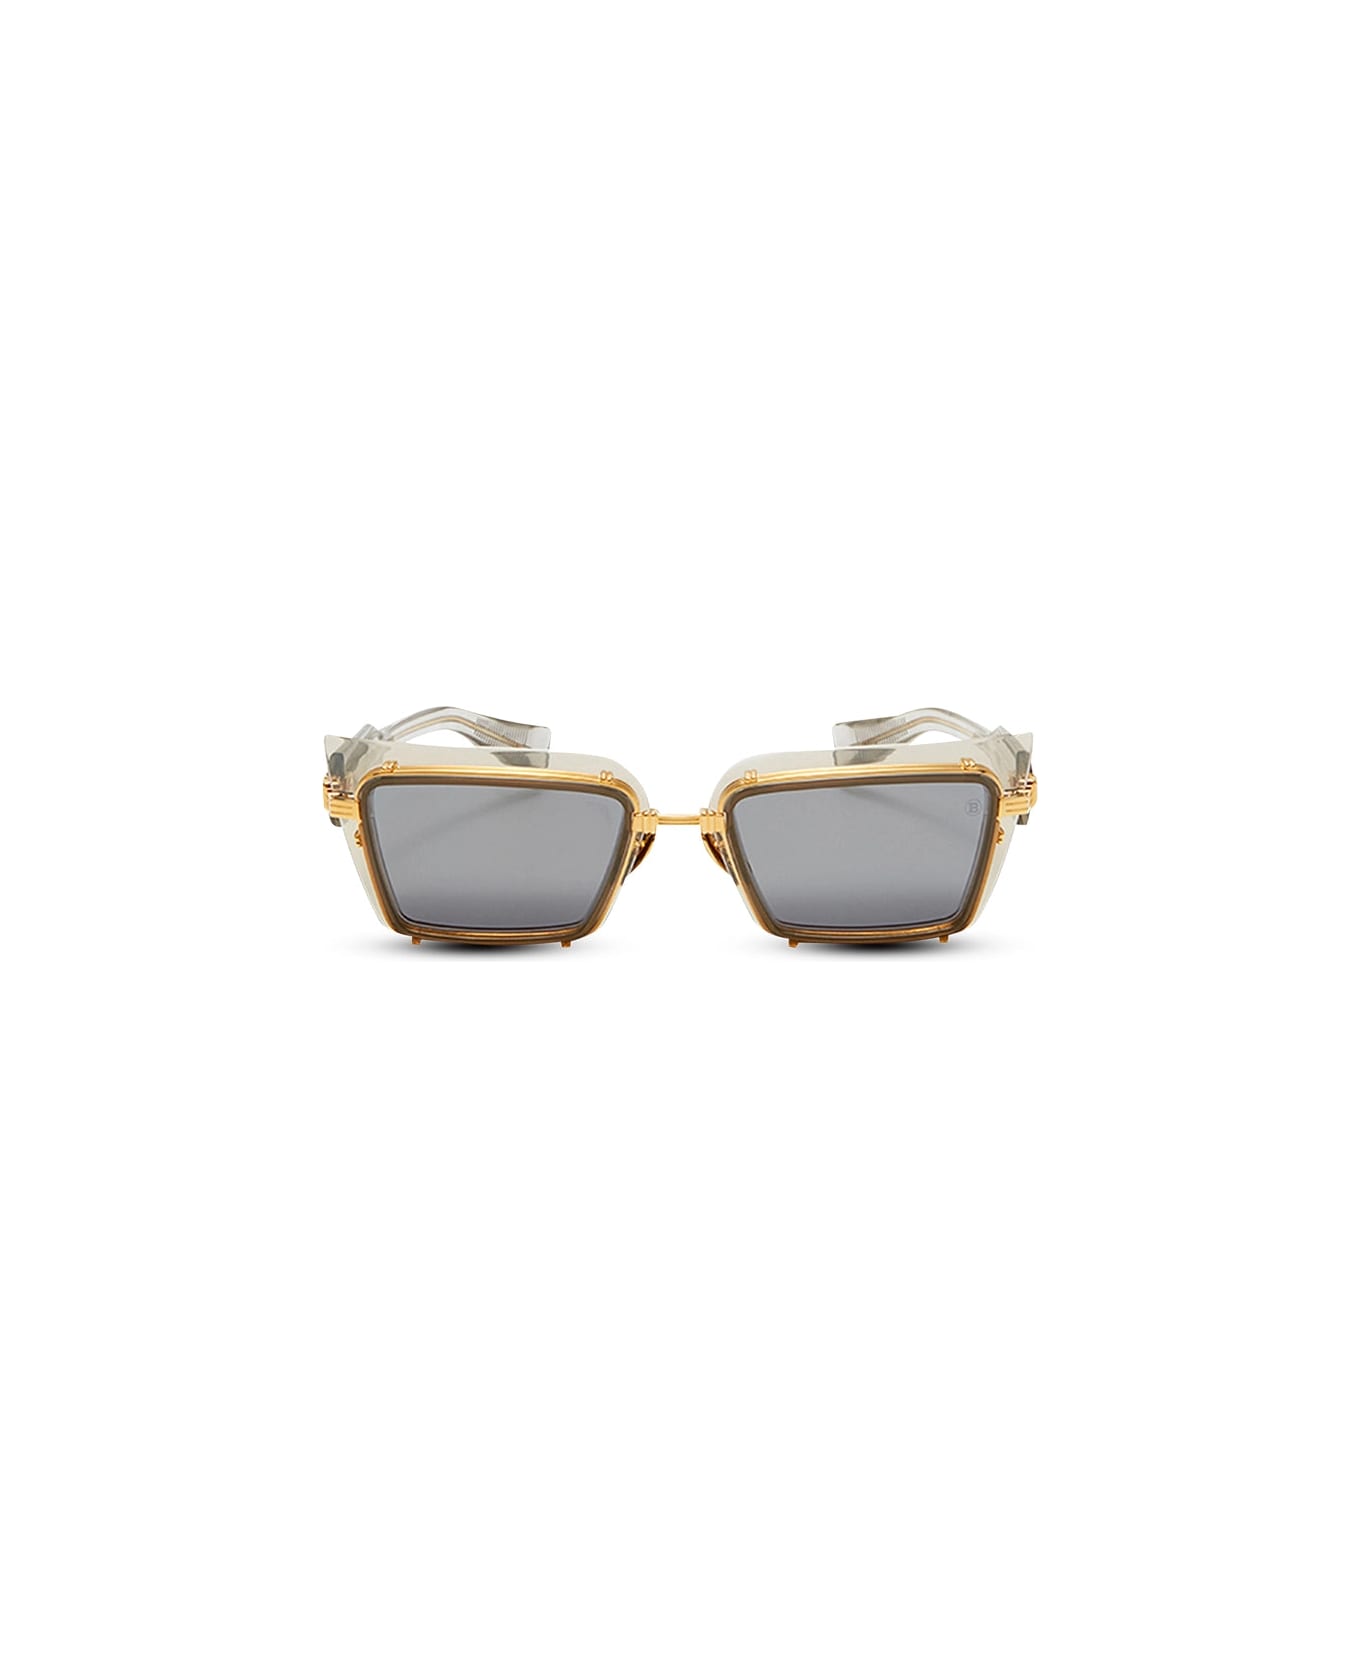 Balmain Admirable - Grey / Gold Sunglasses Sunglasses - gold, clear grey